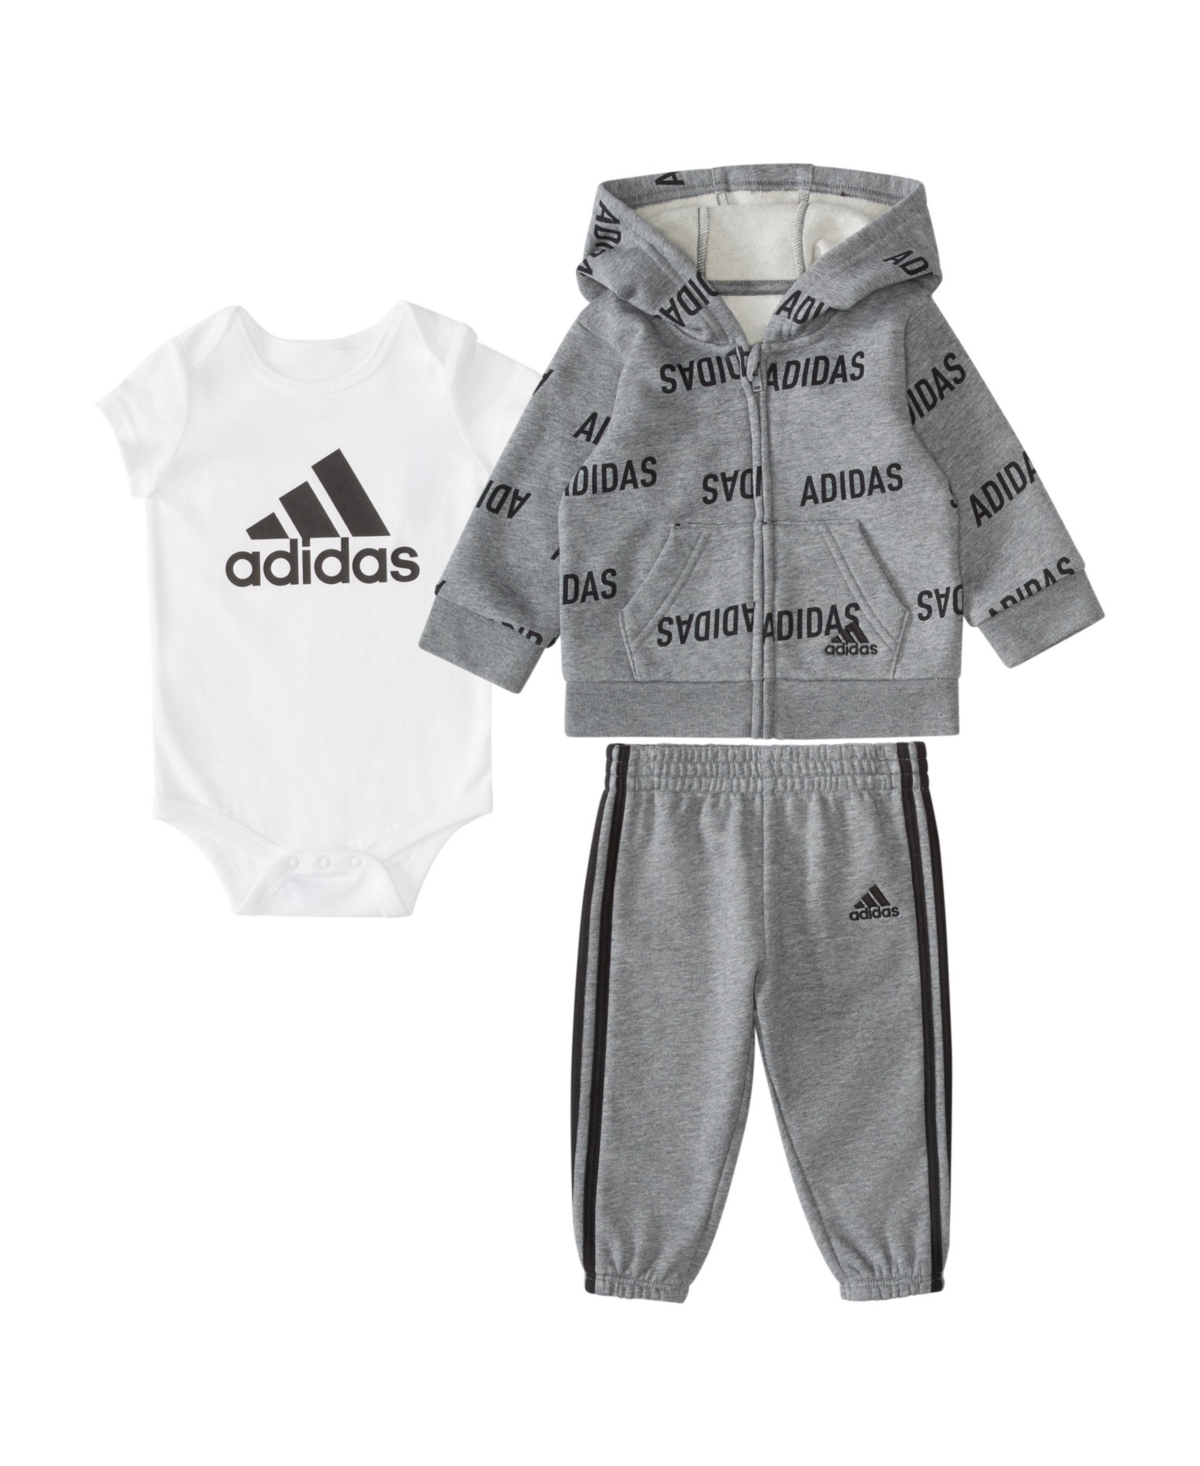 Adidas Originals Baby Boys Fleece Jacket, Bodysuit And Pants, 3 Piece Set In Charcoal Gray Heather